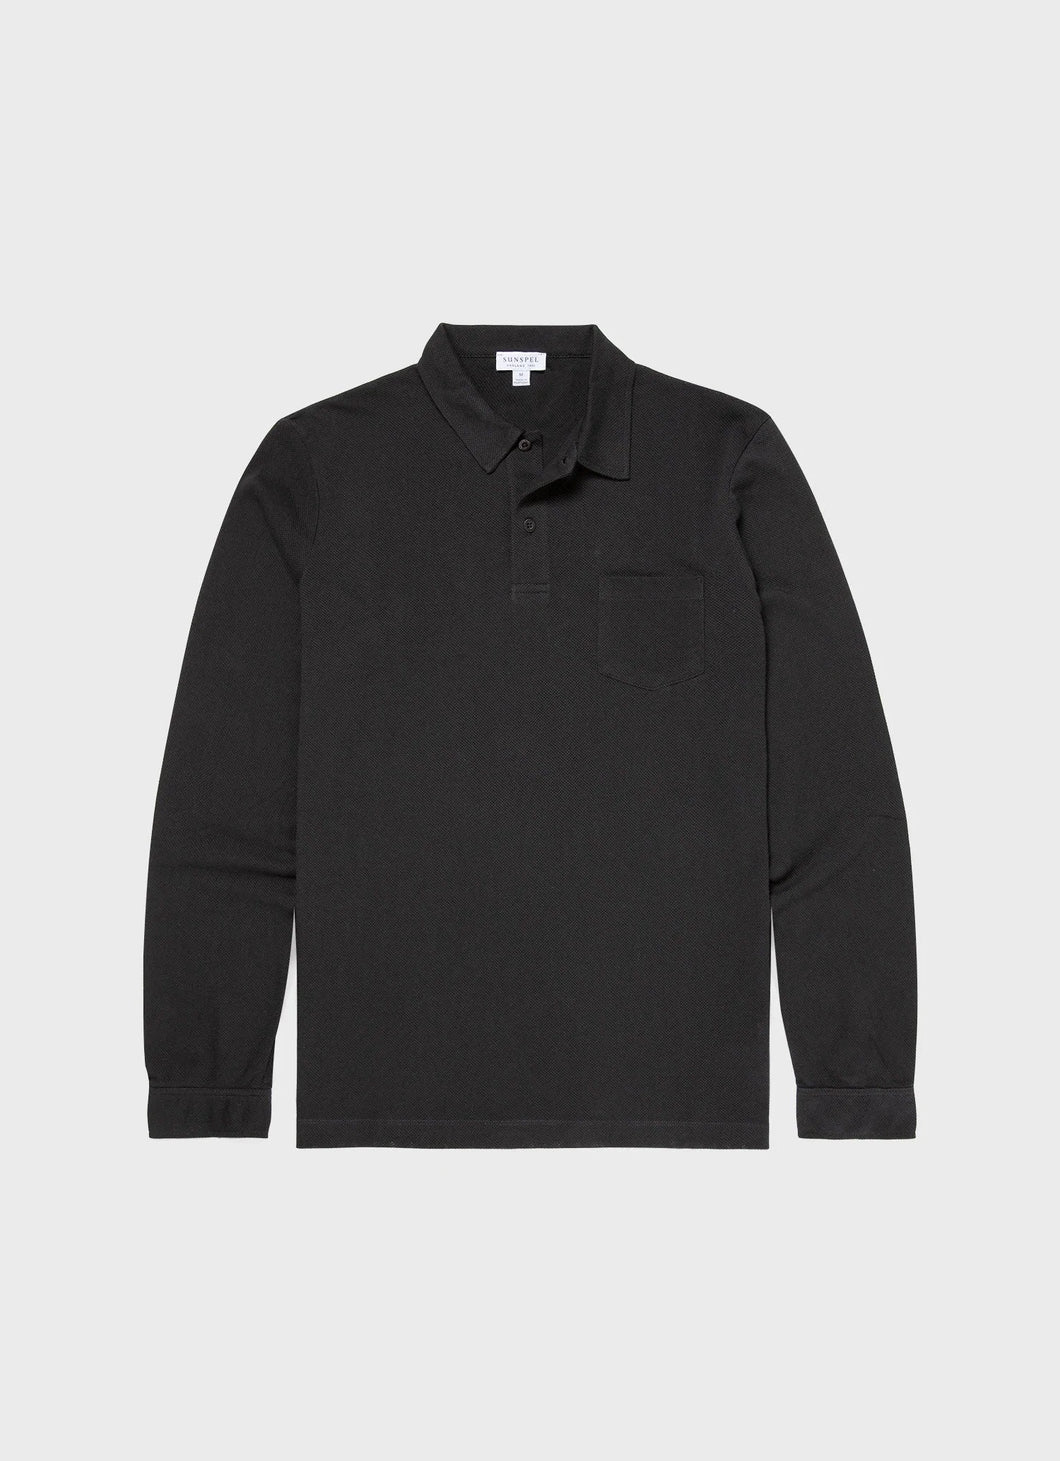 Sunspel - Cotton Riviera LS Polo Shirt in Black.